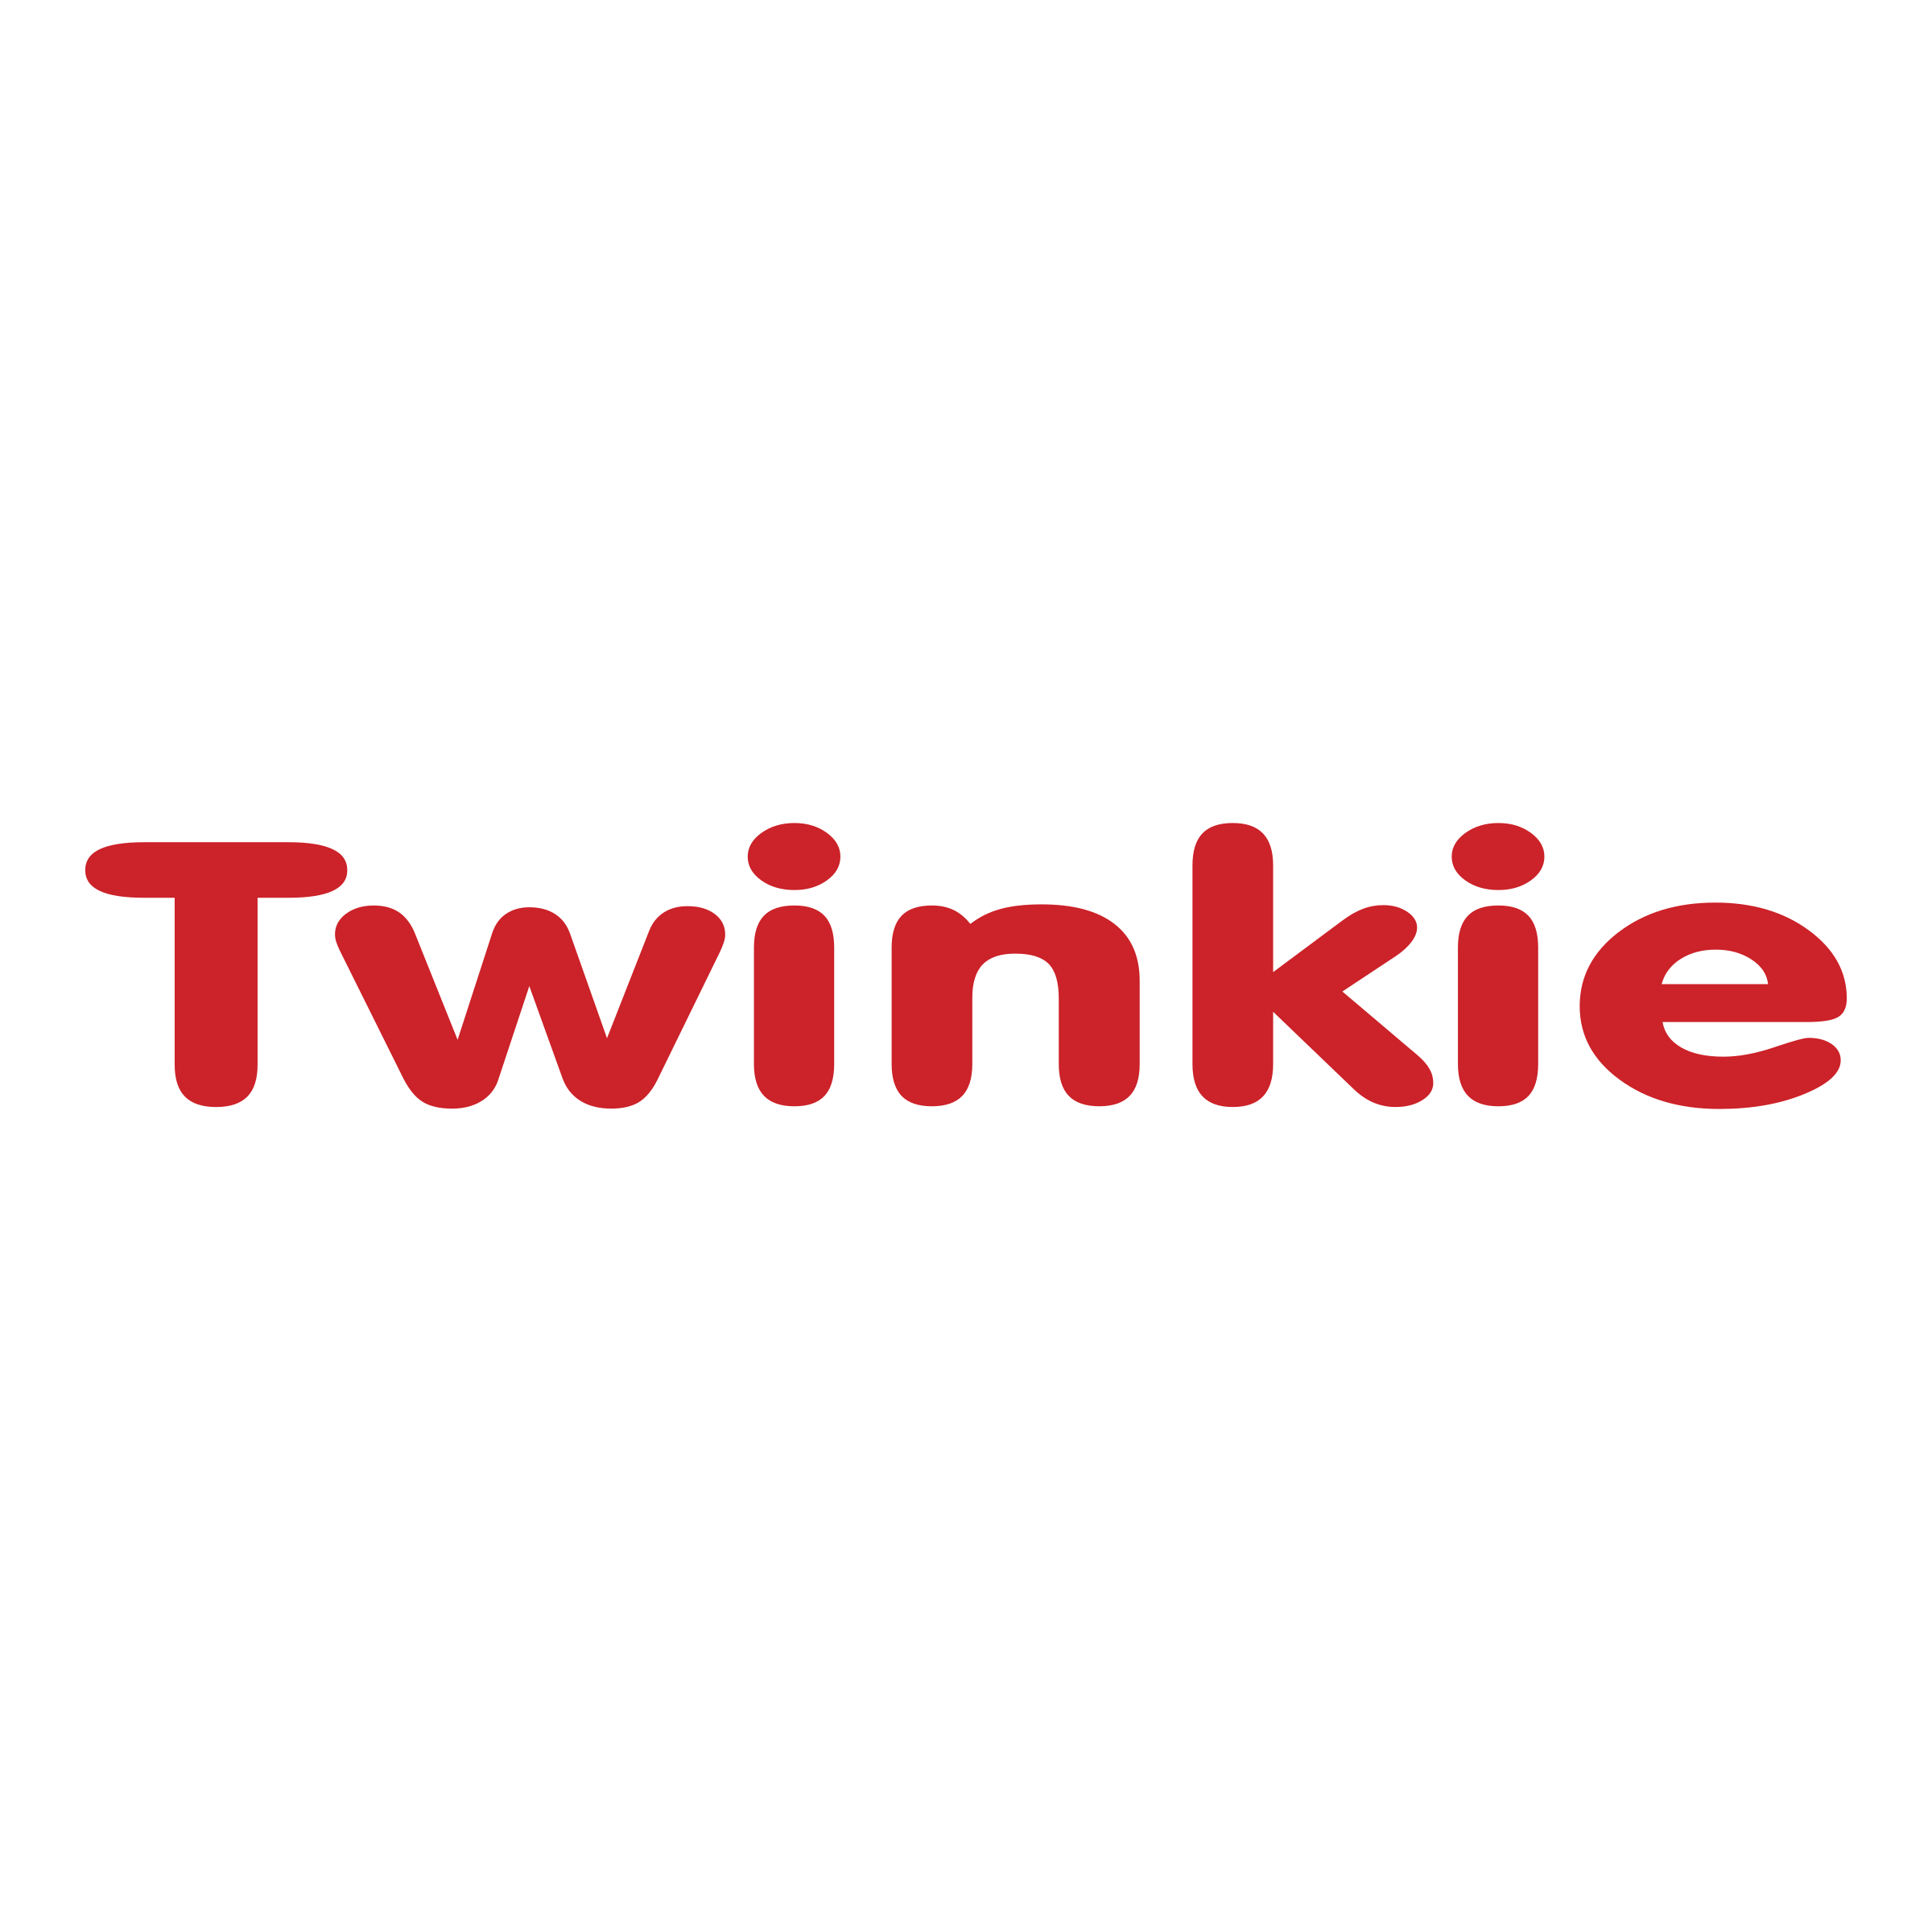 Twinkie Logo - Twinkie Logo PNG Transparent & SVG Vector